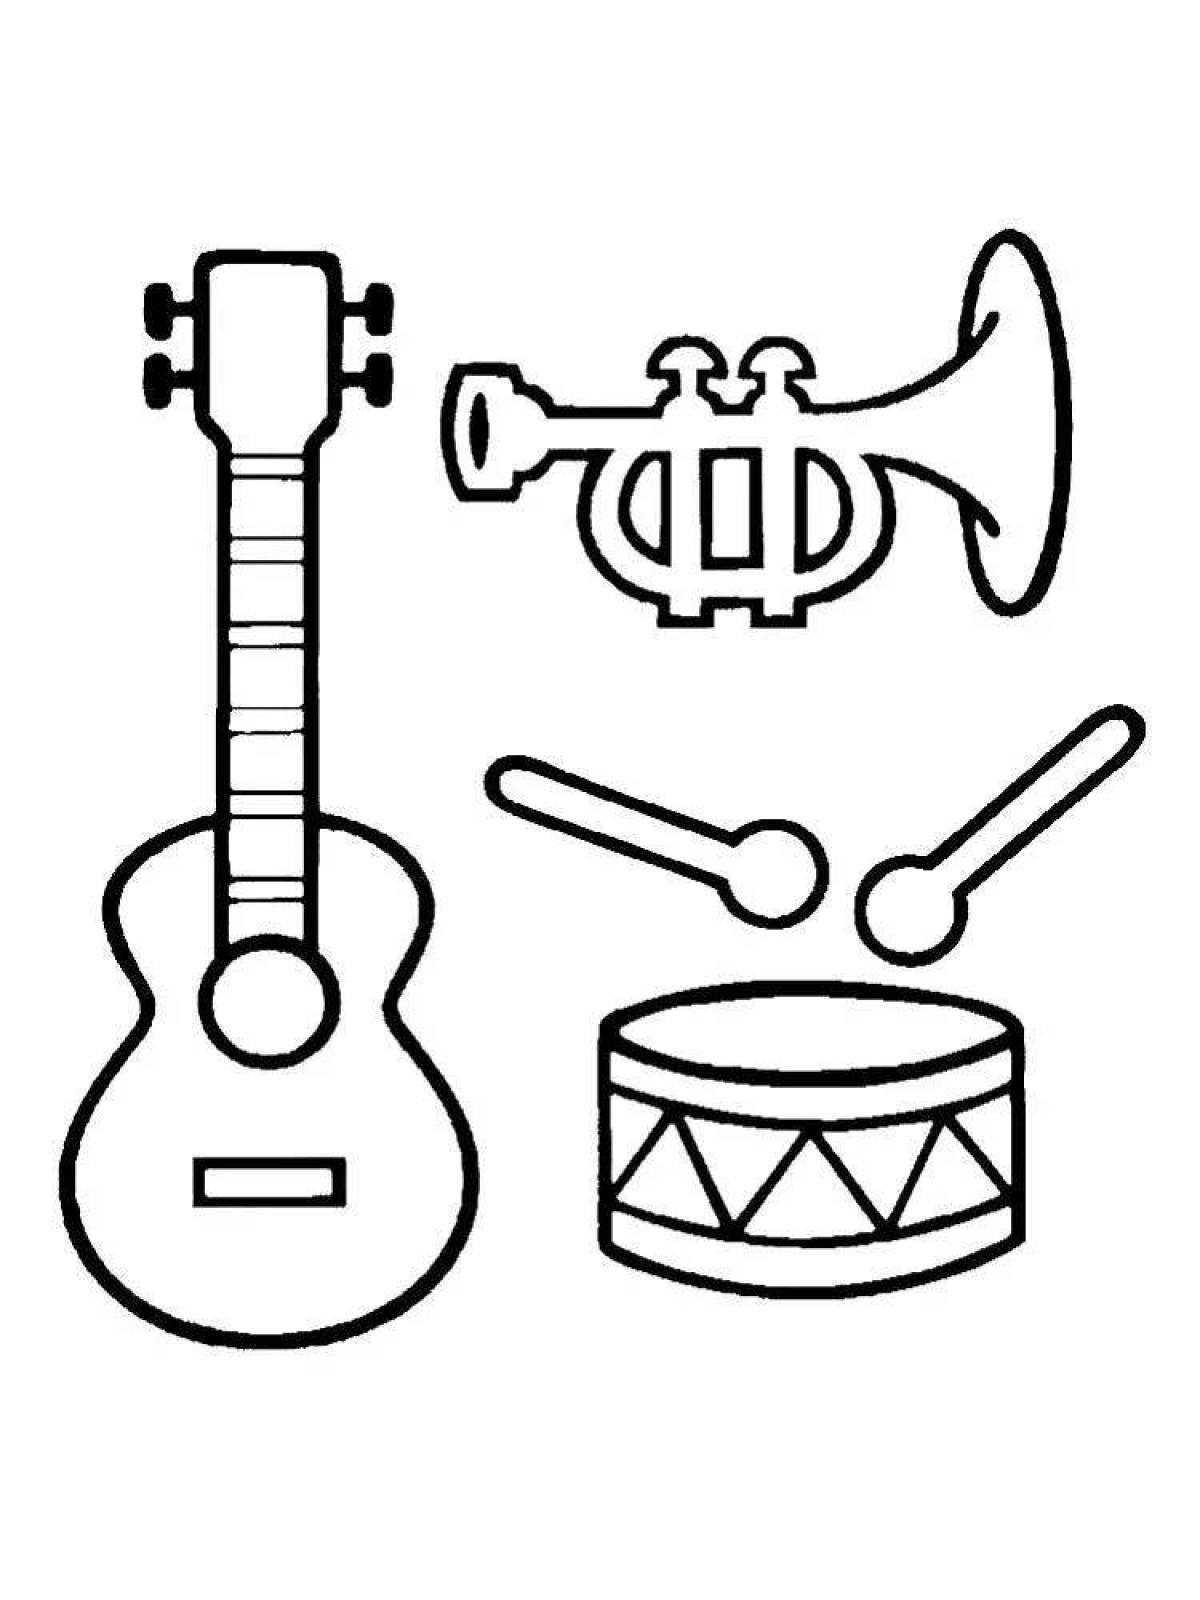 Musical instruments for children #15